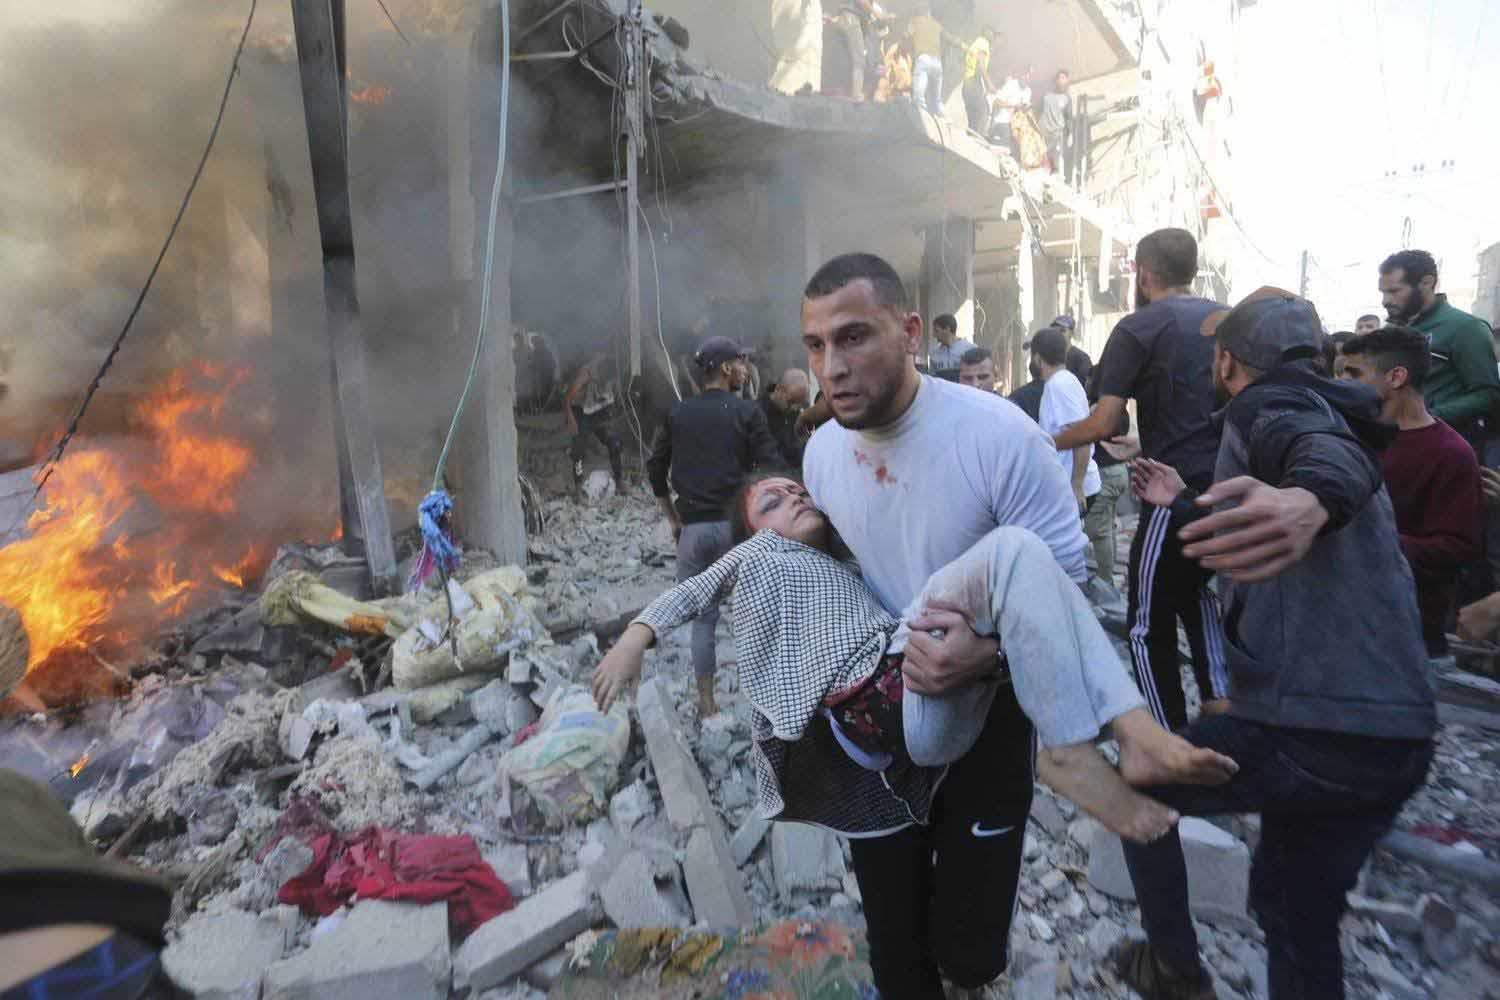 ضحايا غزة